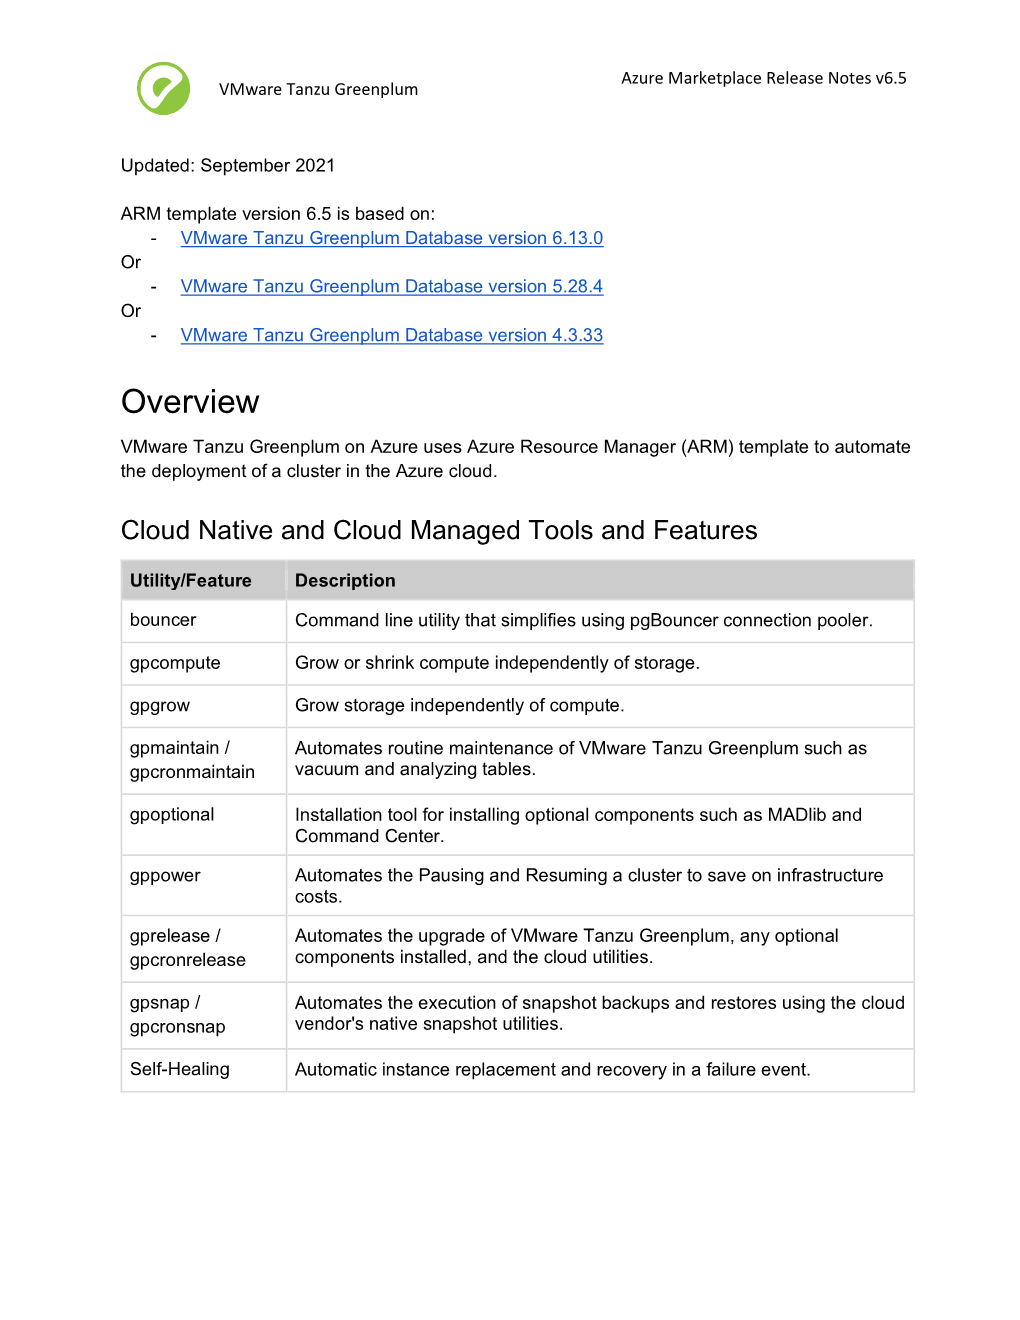 Vmware Tanzu Greenplum on Azure Marketplace Release Notes V6.5.Pdf